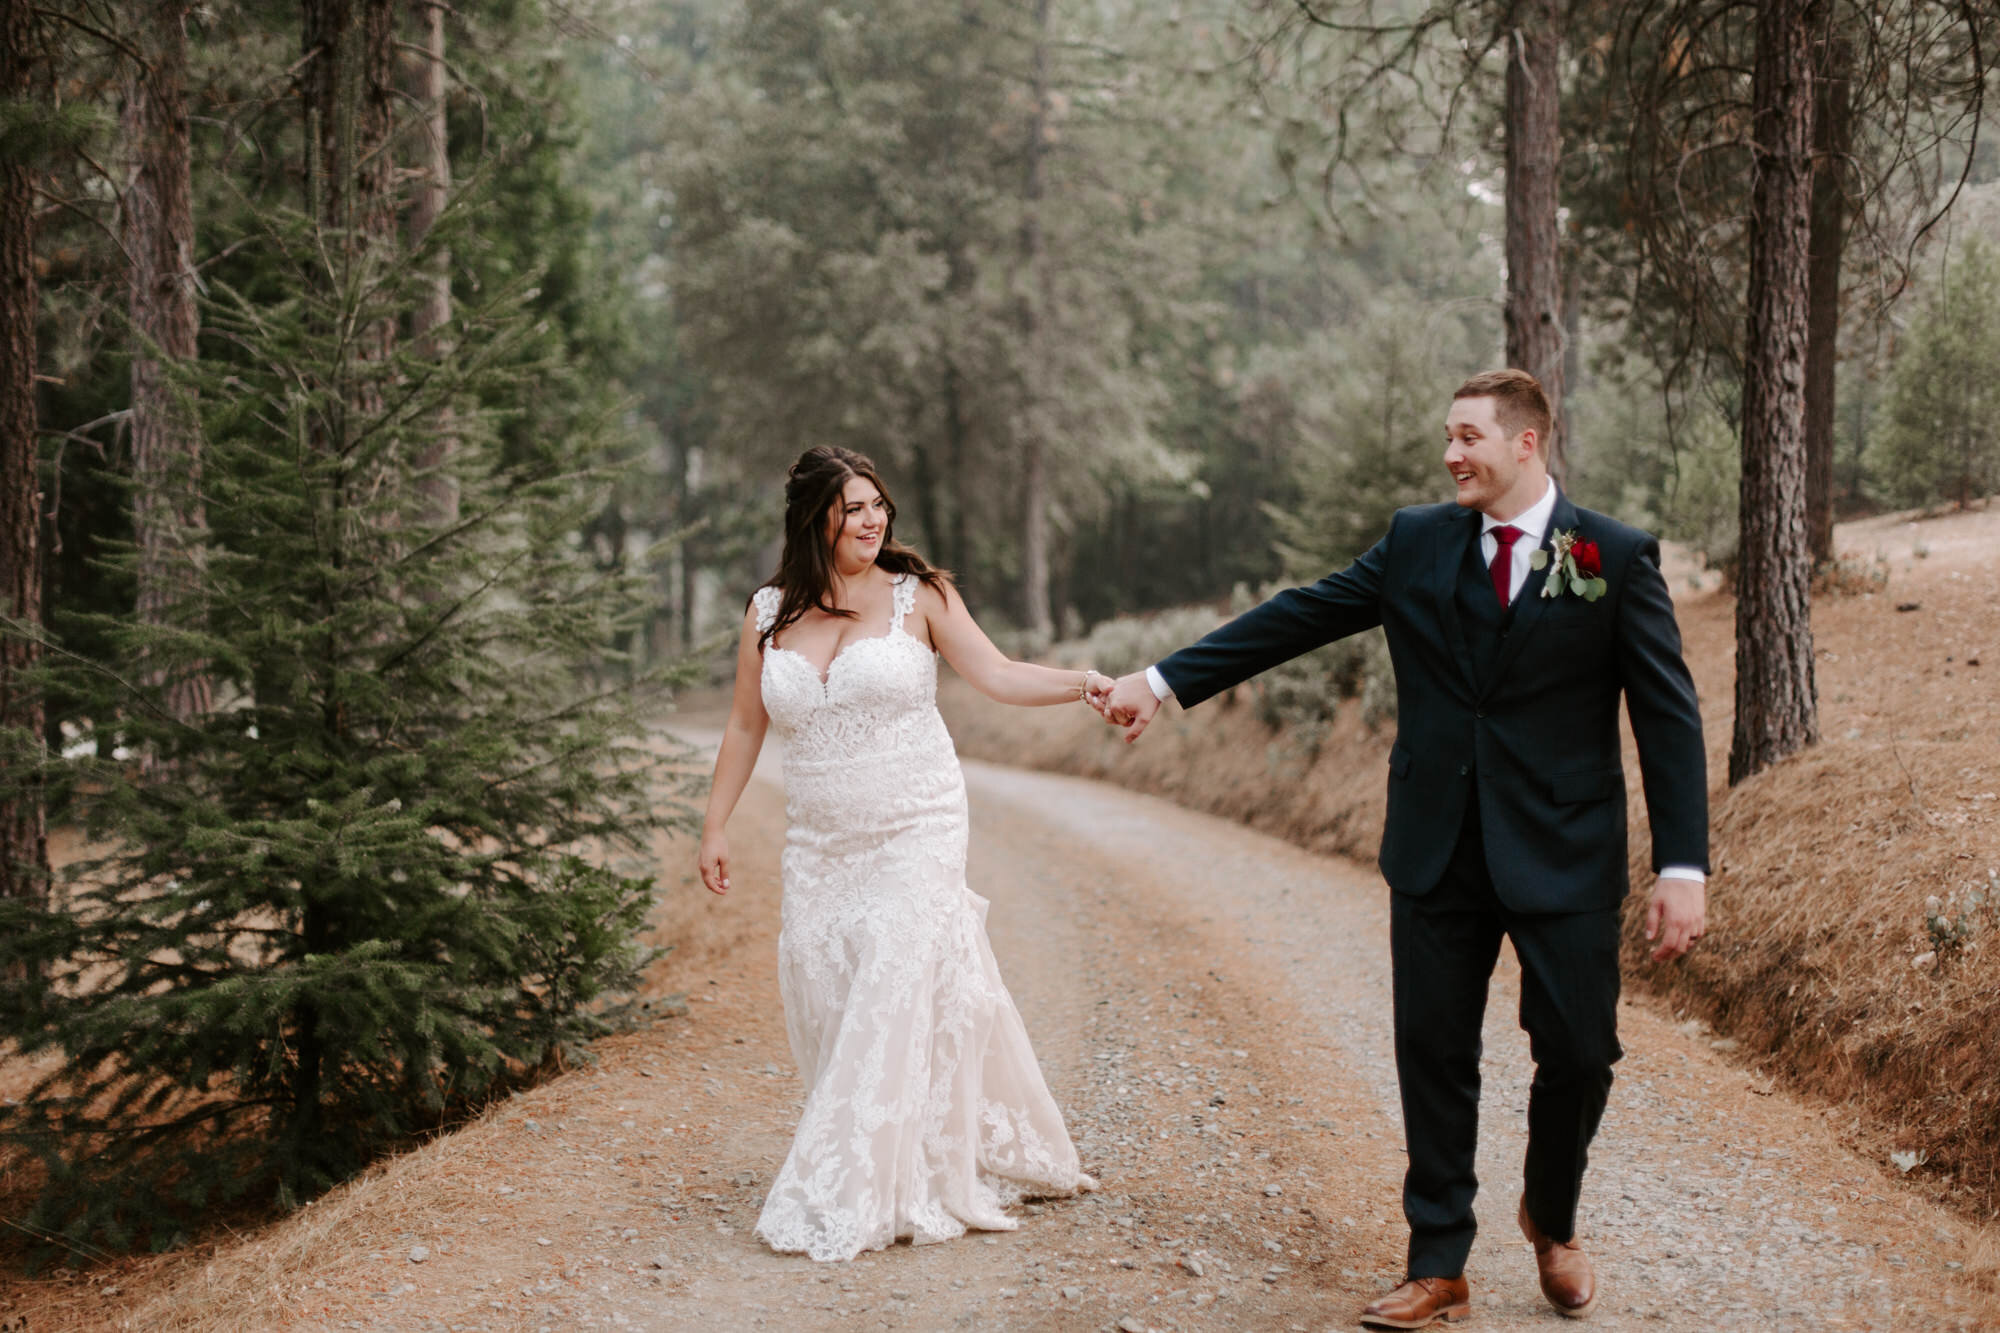 San Diego Wedding Photographer, San Diego Wedding photography, Tahoe Wedding Photographer, Tahoe Wedding Photography, Tahoe Wedding, forrest Wedding, lace wedding dress, Lace, backyard wedding